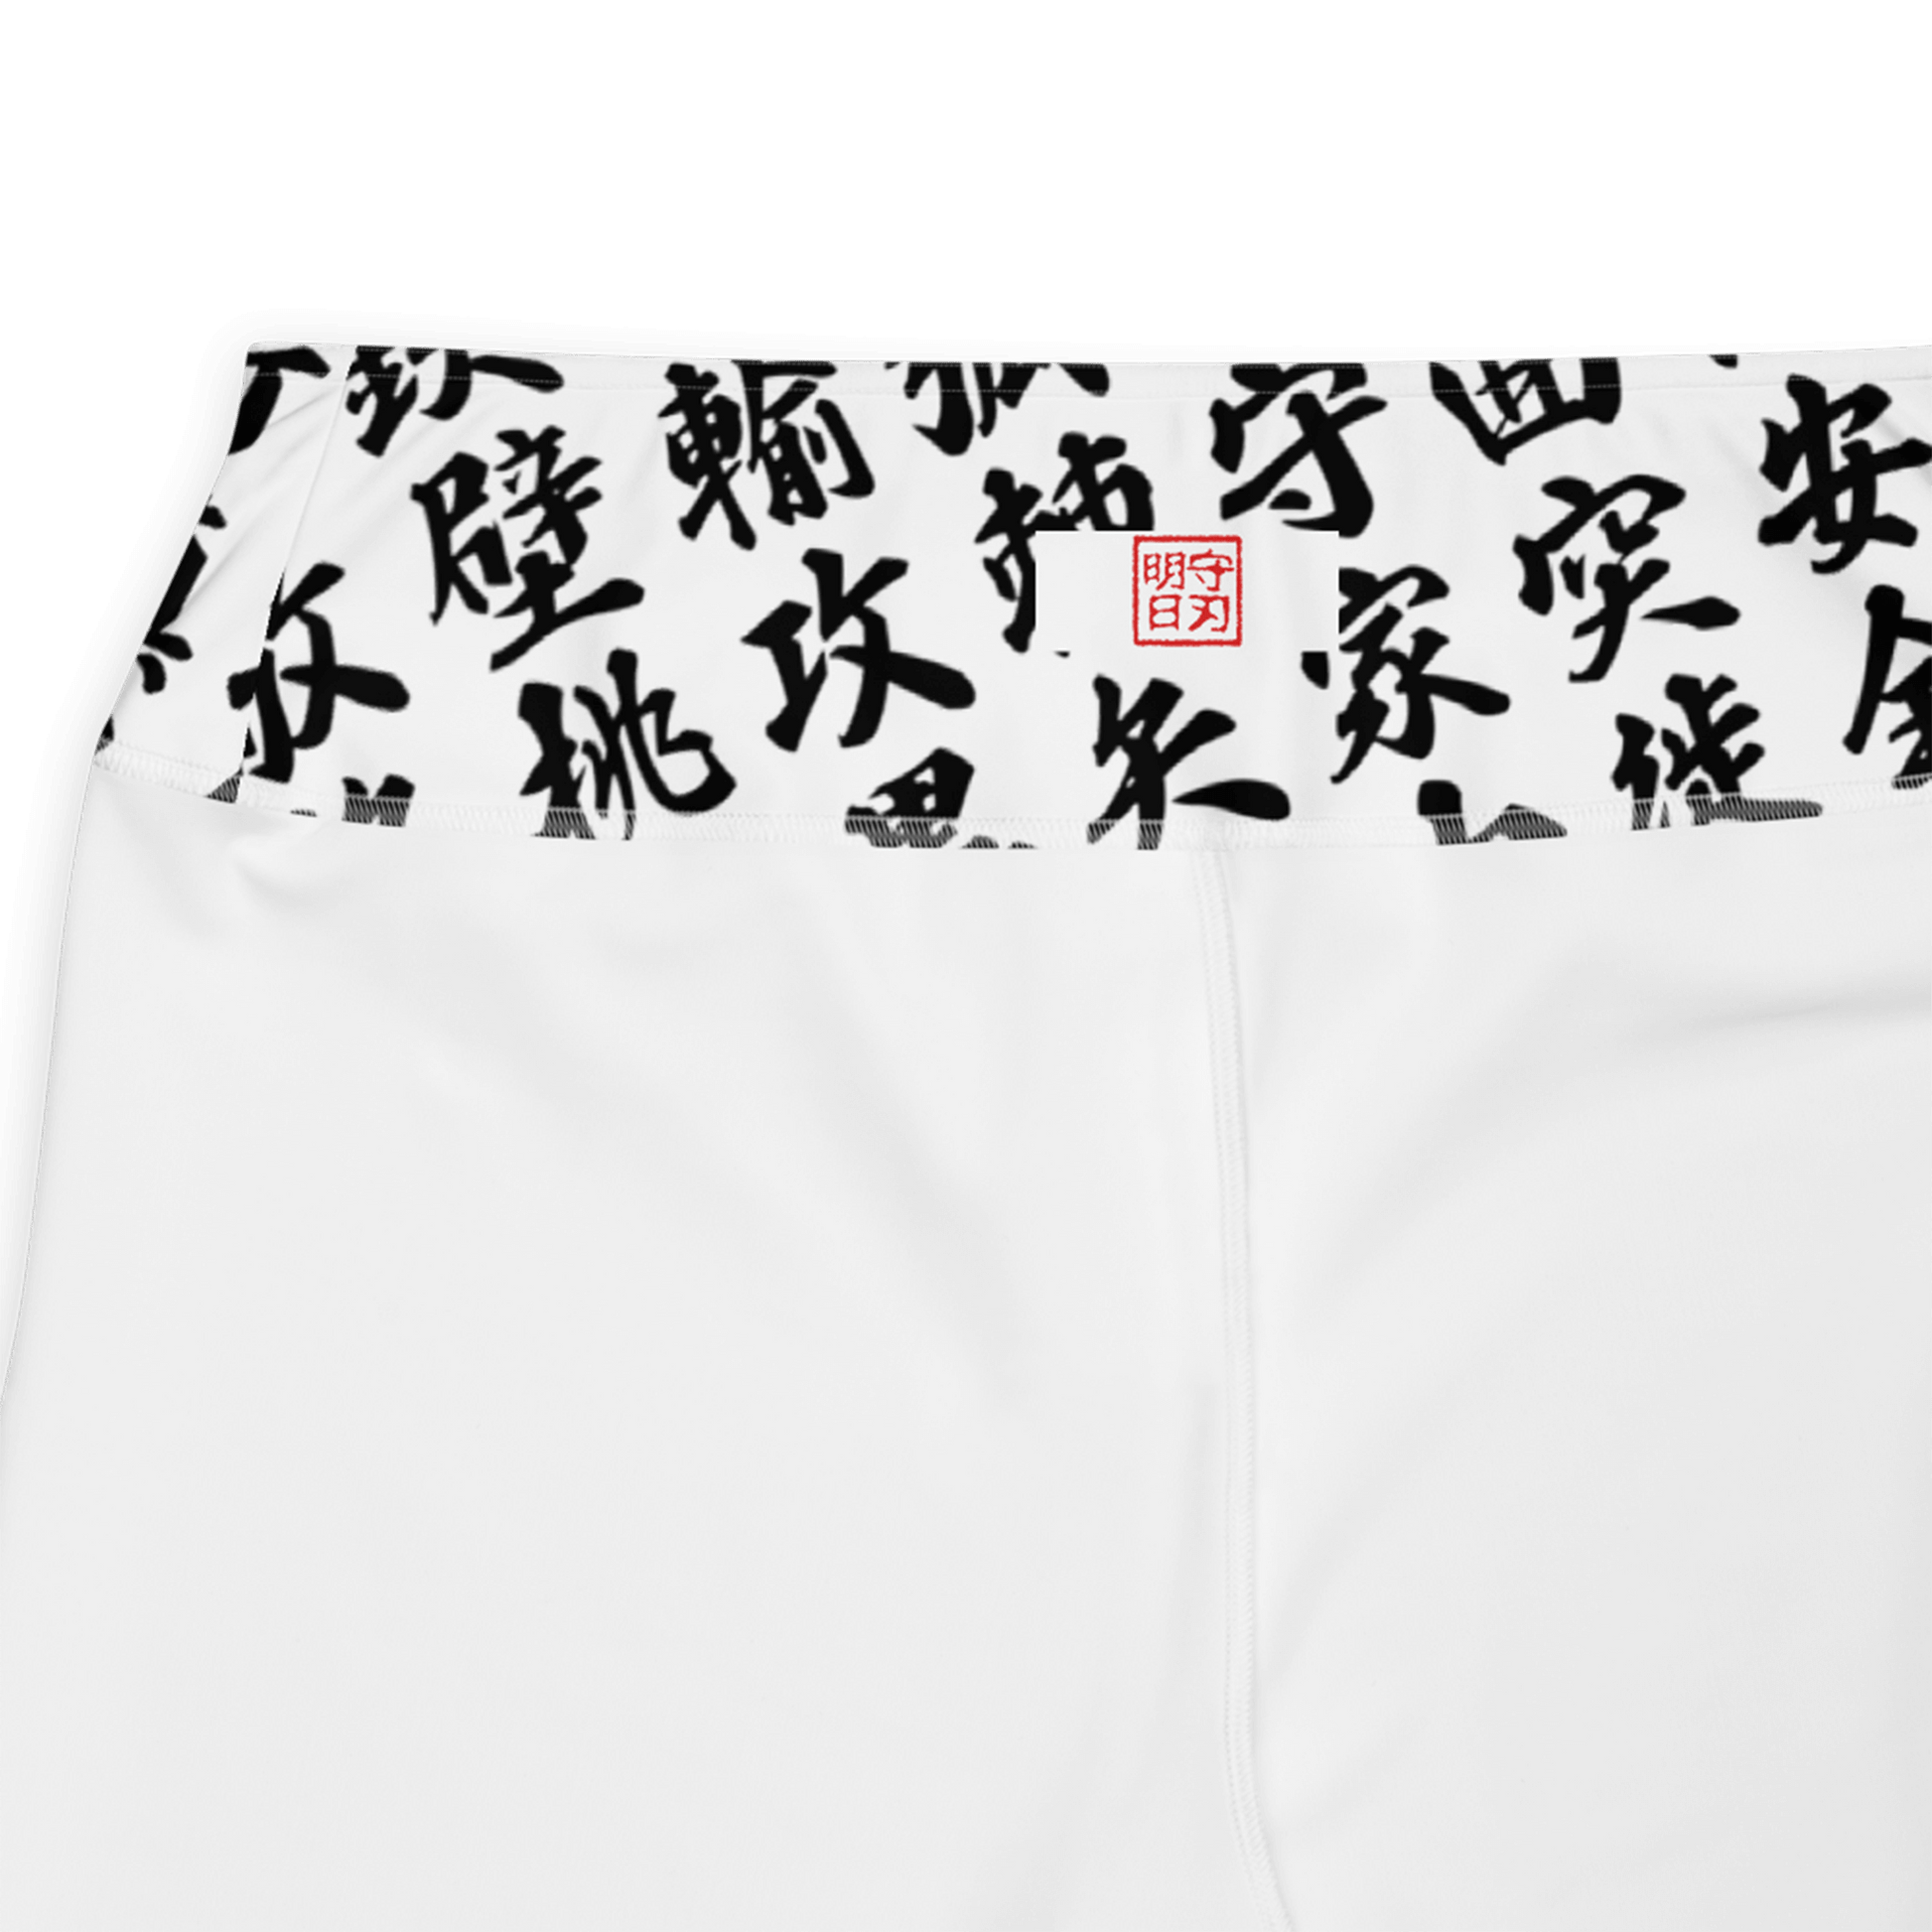 Women white plus size leggings with all-over print in Japanese KANJ